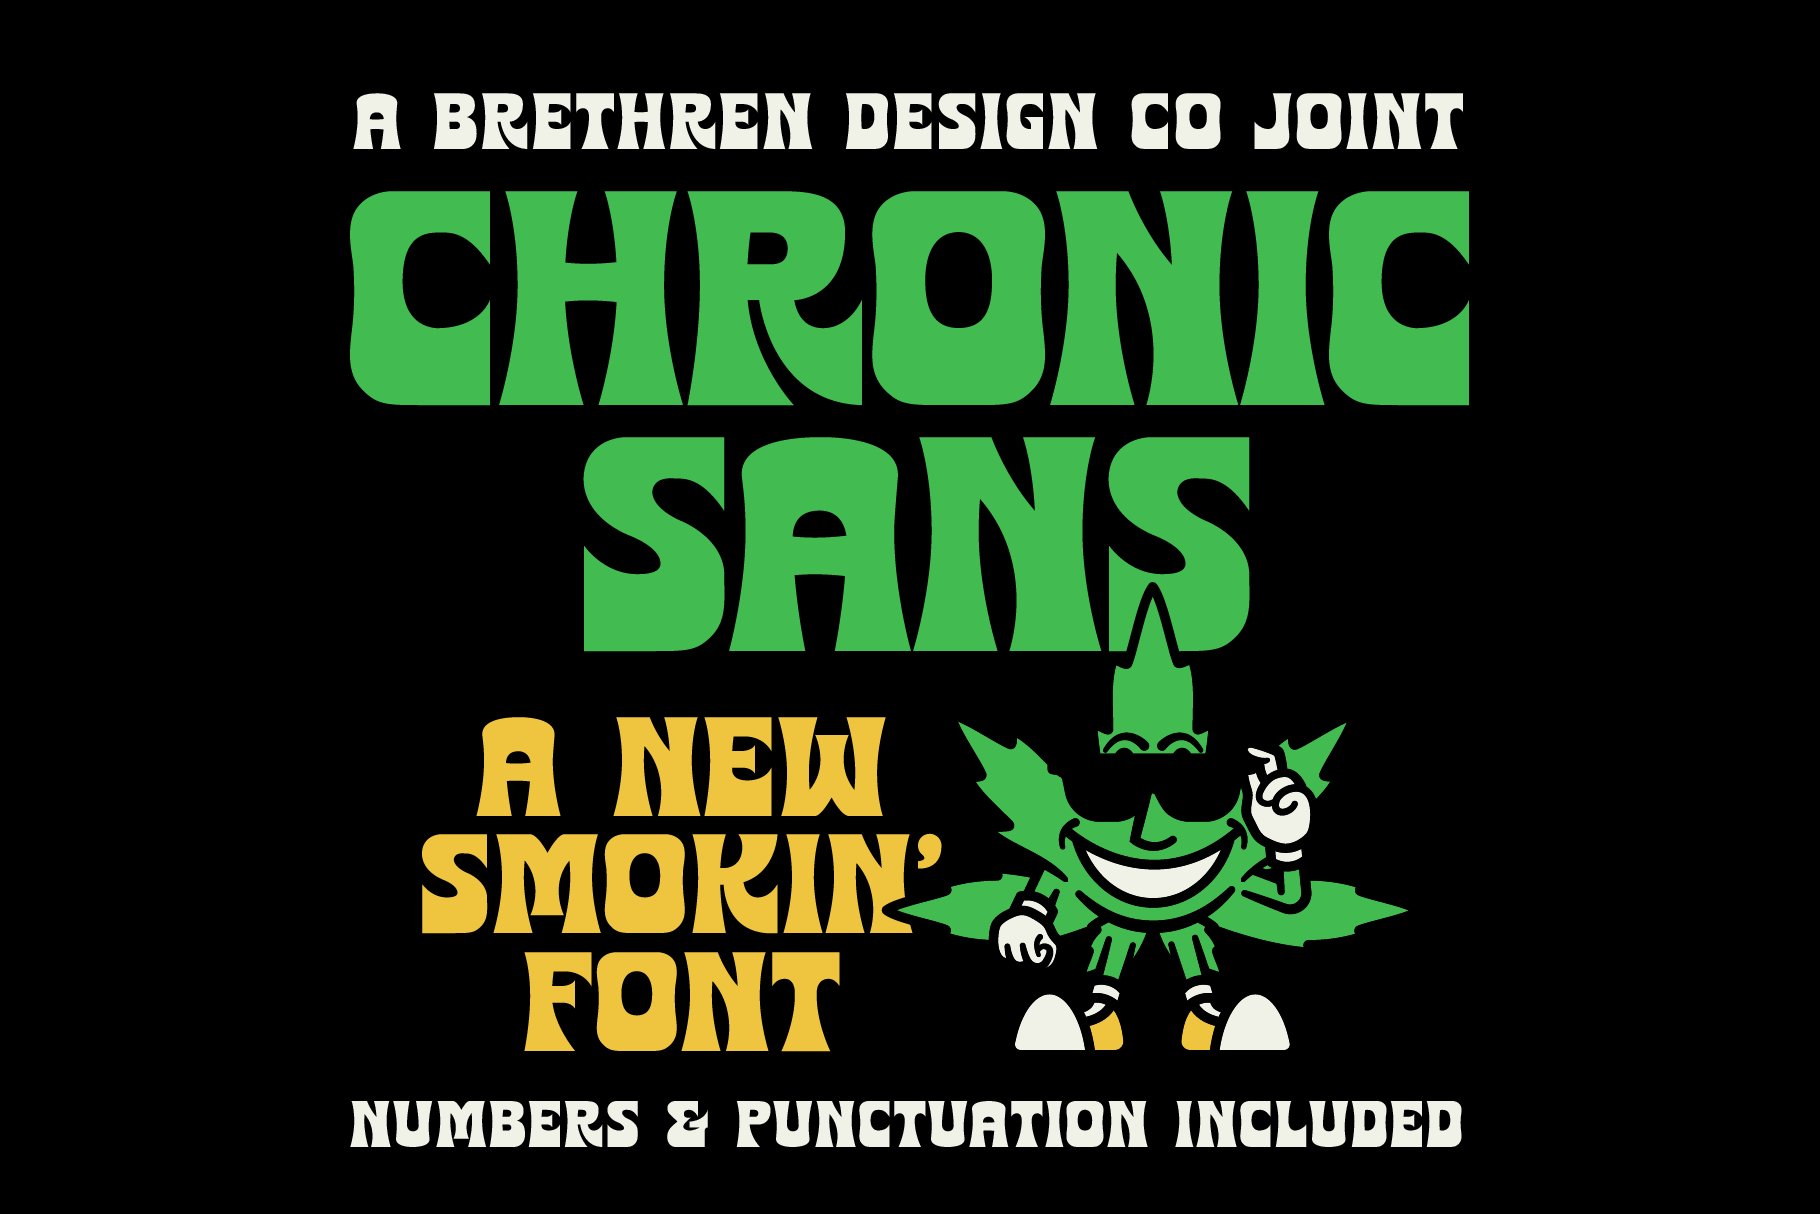 Chronic Sans Display Font cover image.